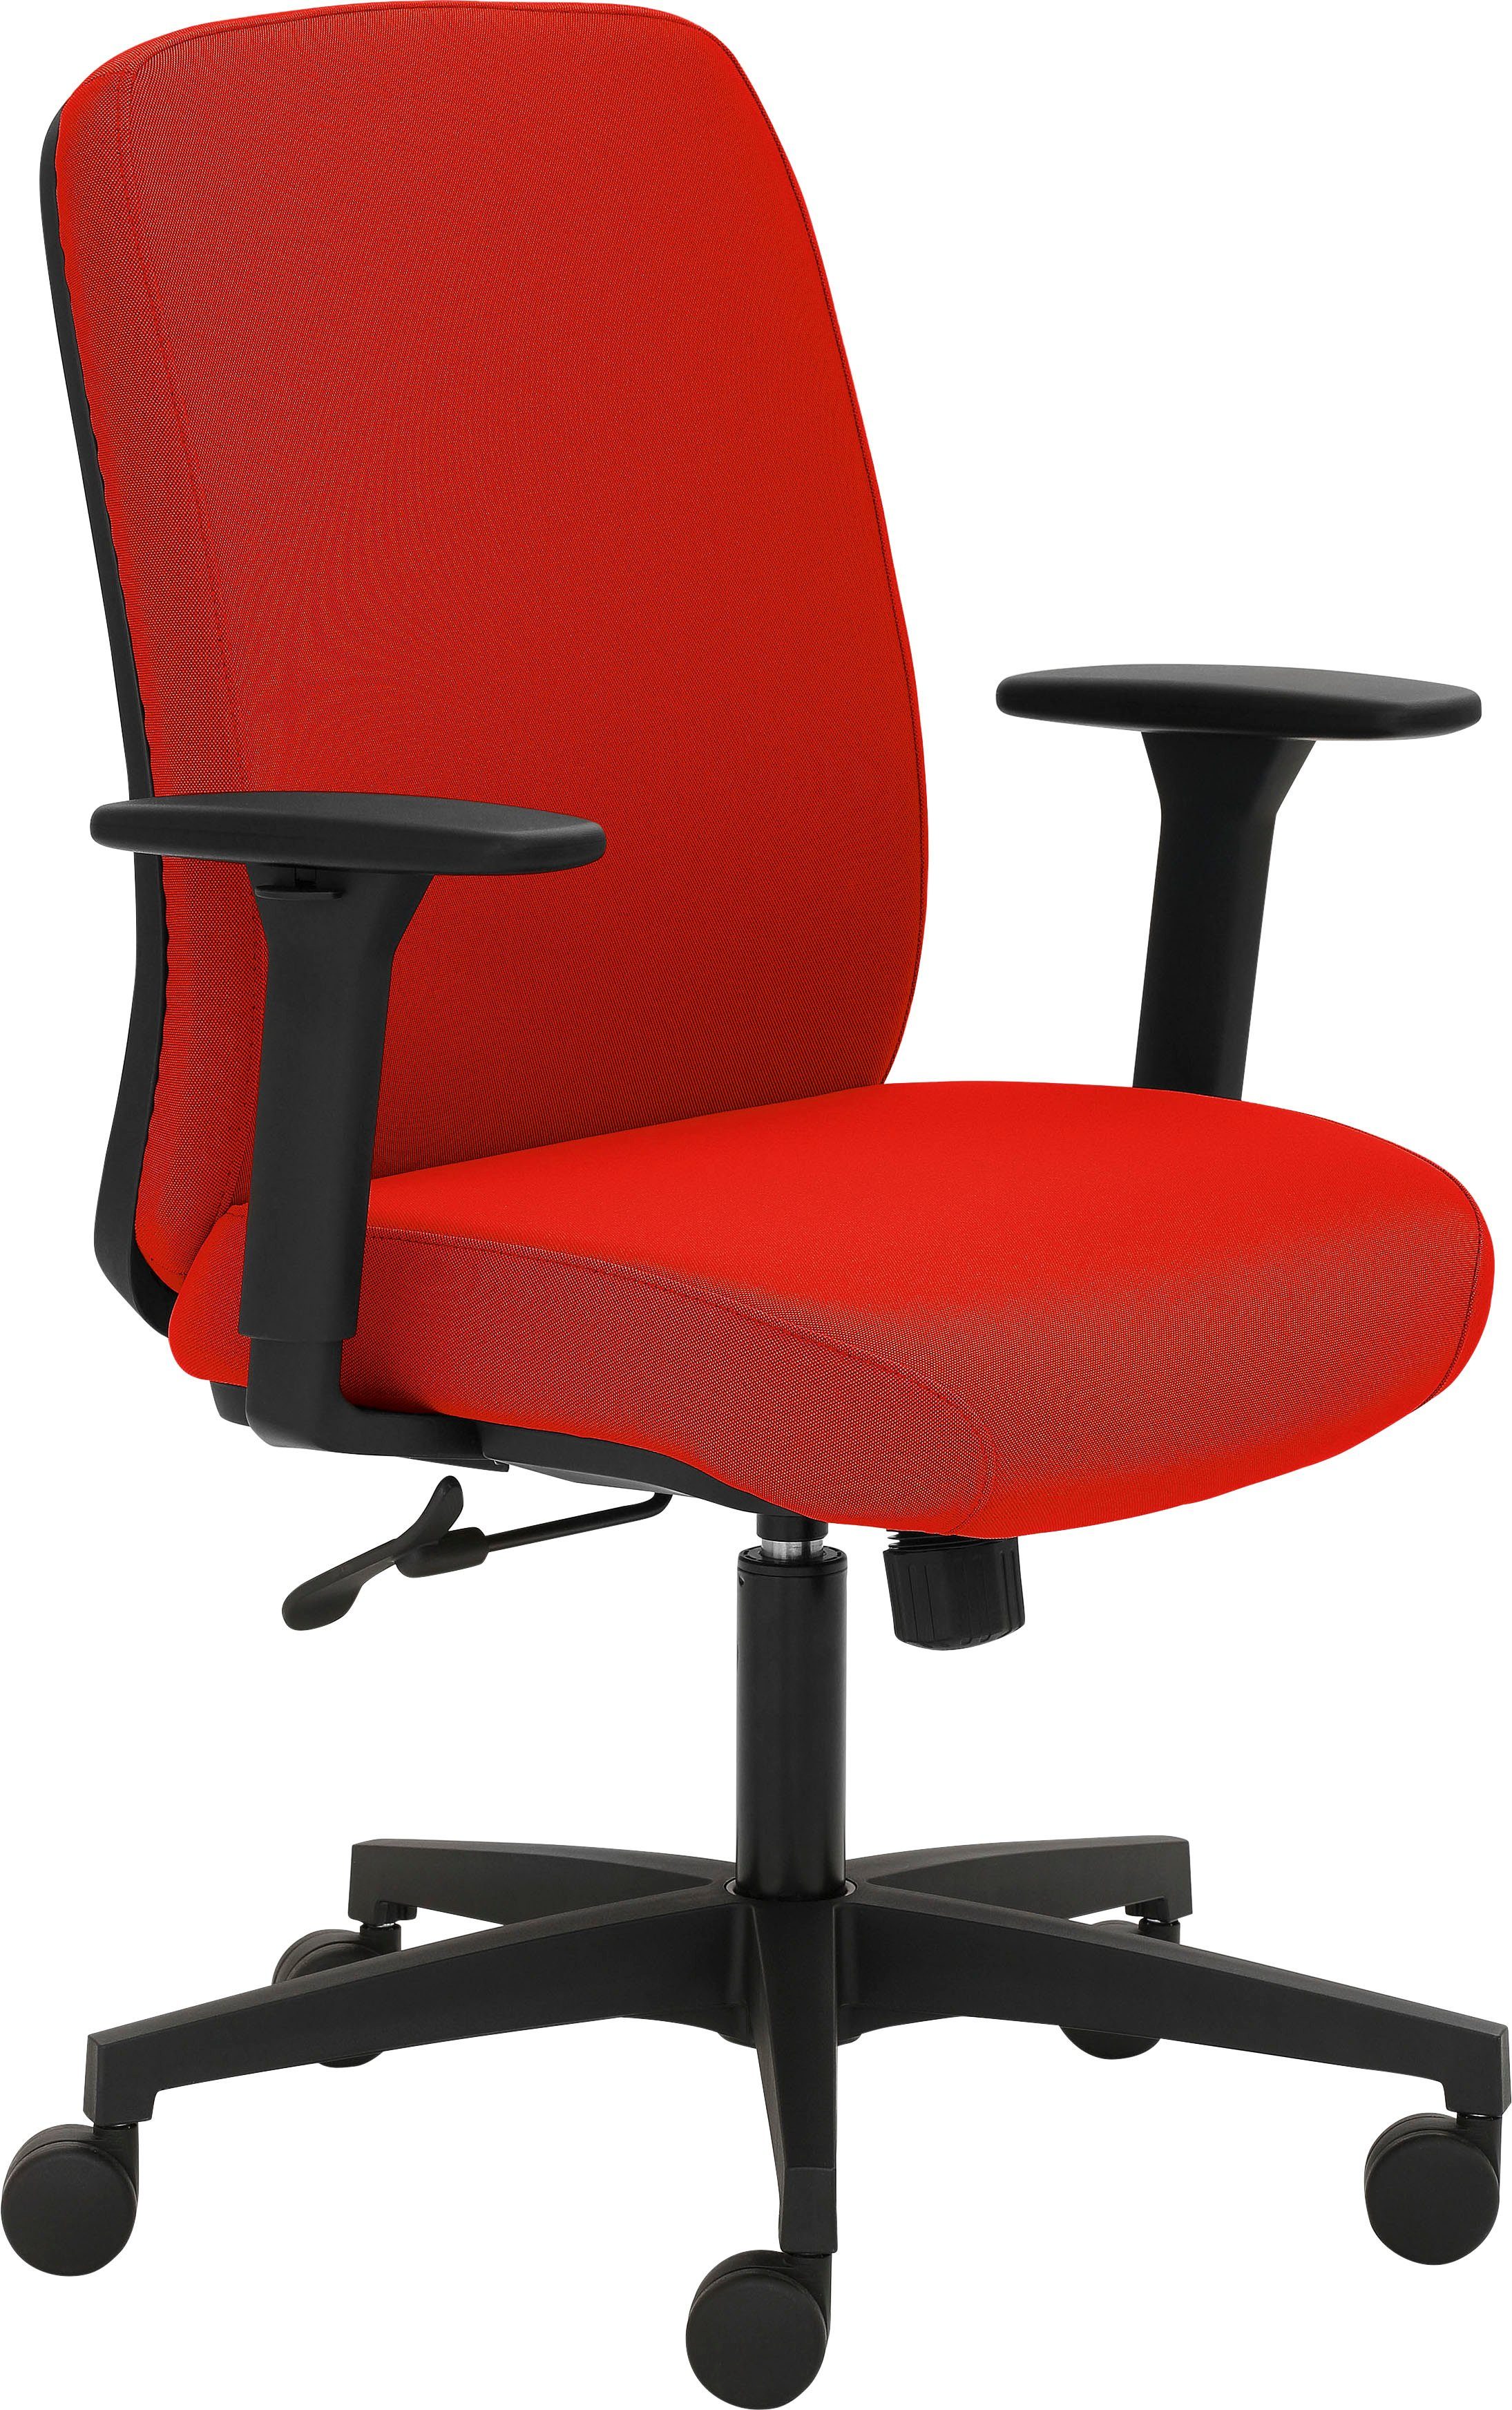 Mayer Sitzmöbel Drehstuhl 2219, GS-zertifiziert, extra starke Polsterung für maximalen Sitzkomfort Kirschrot | Kirschrot